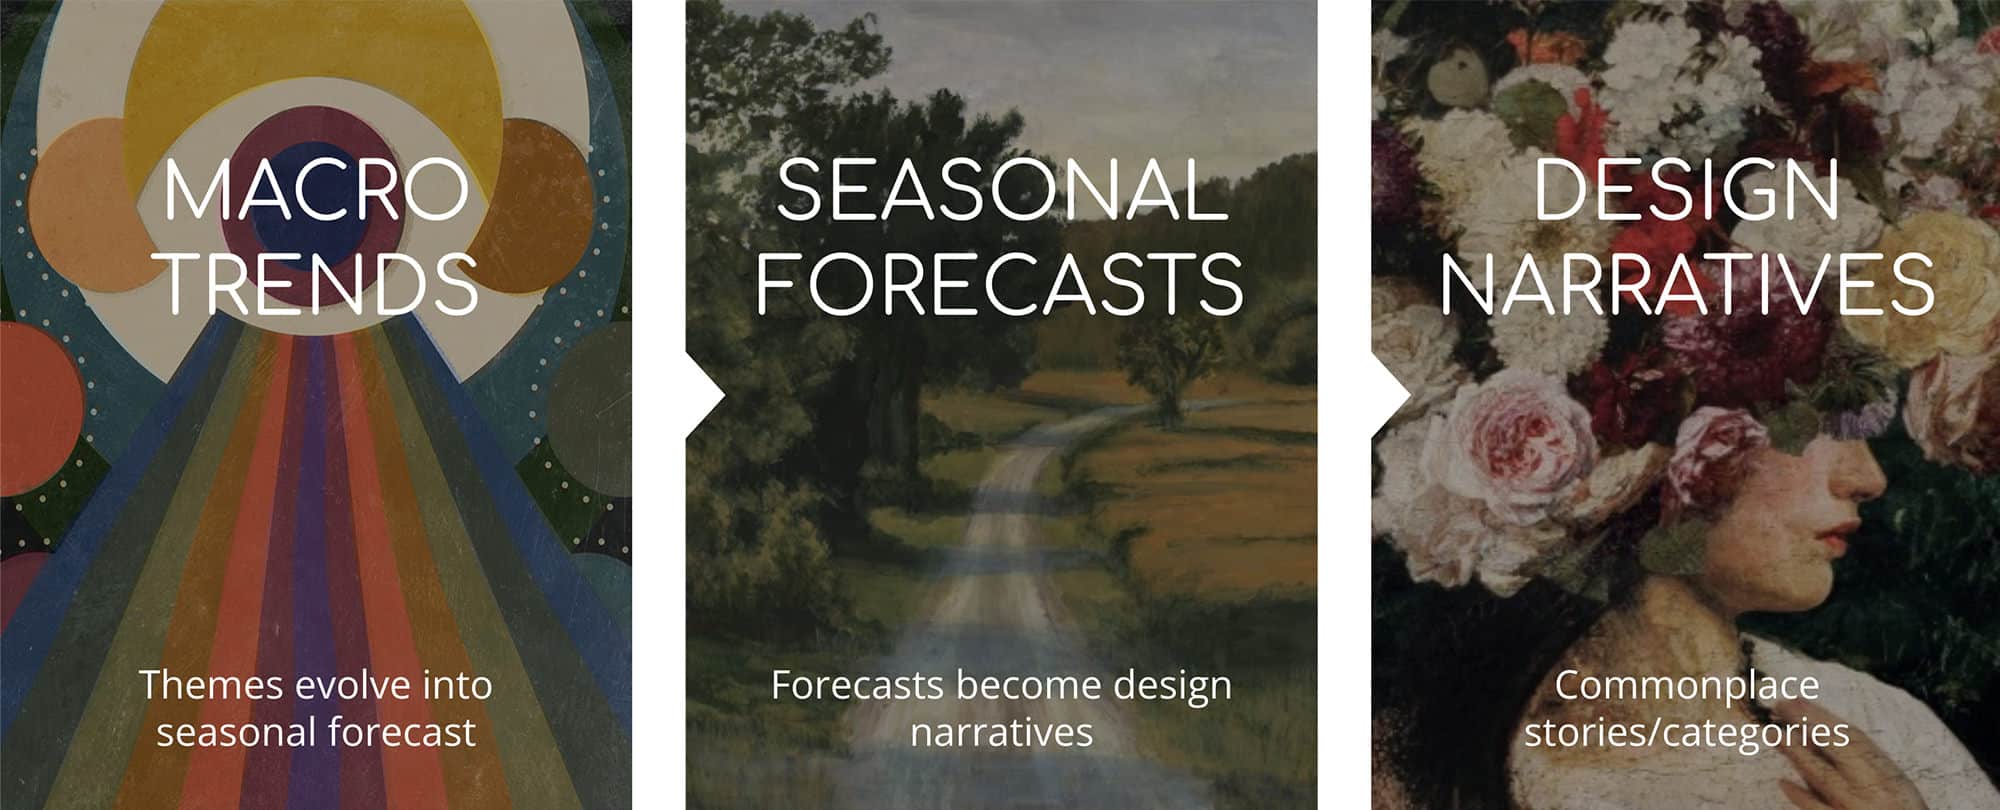 macro trends, seasonal forecasts, design narratives